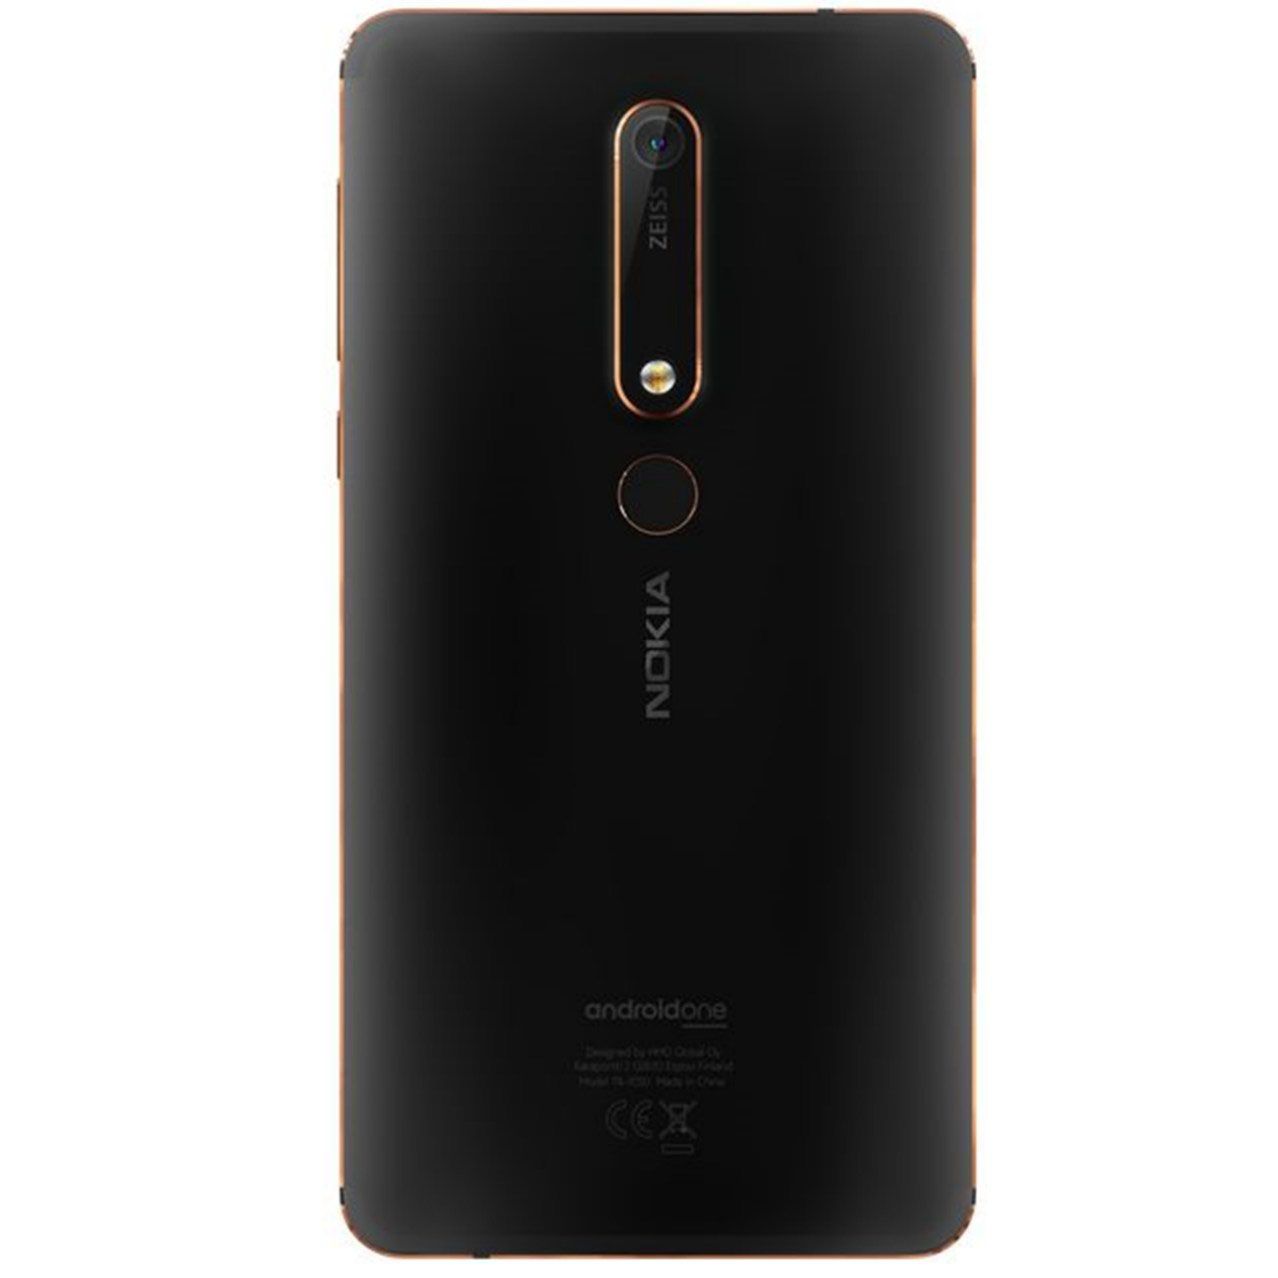 Nokia 6 1 Specs Review Release Date Phonesdata